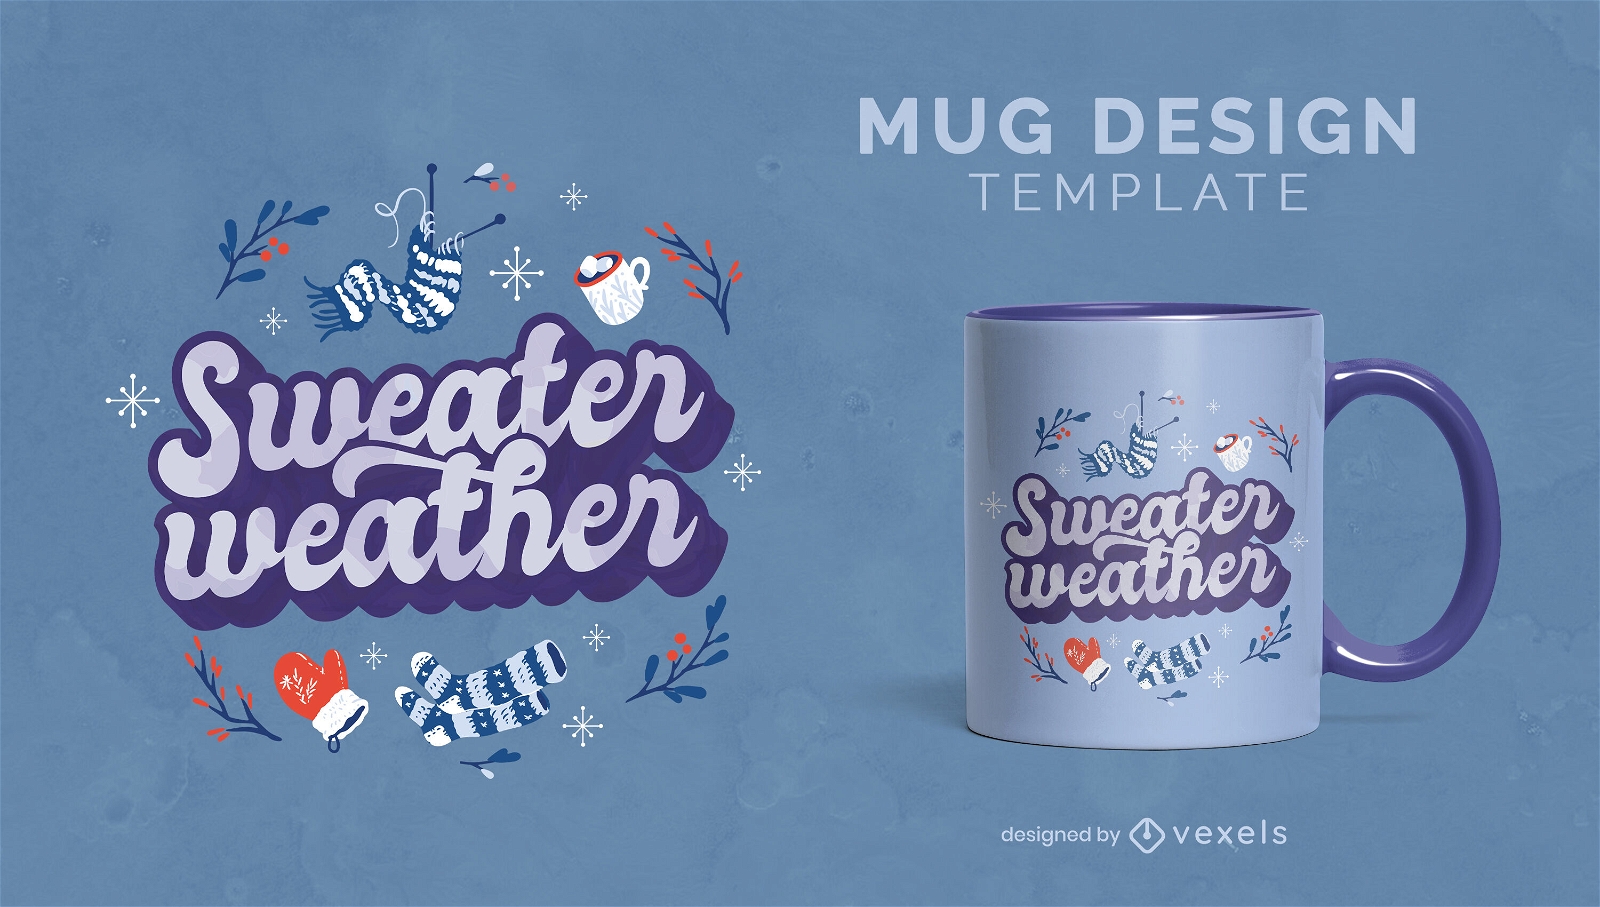 Sweater weather winter quote mug design